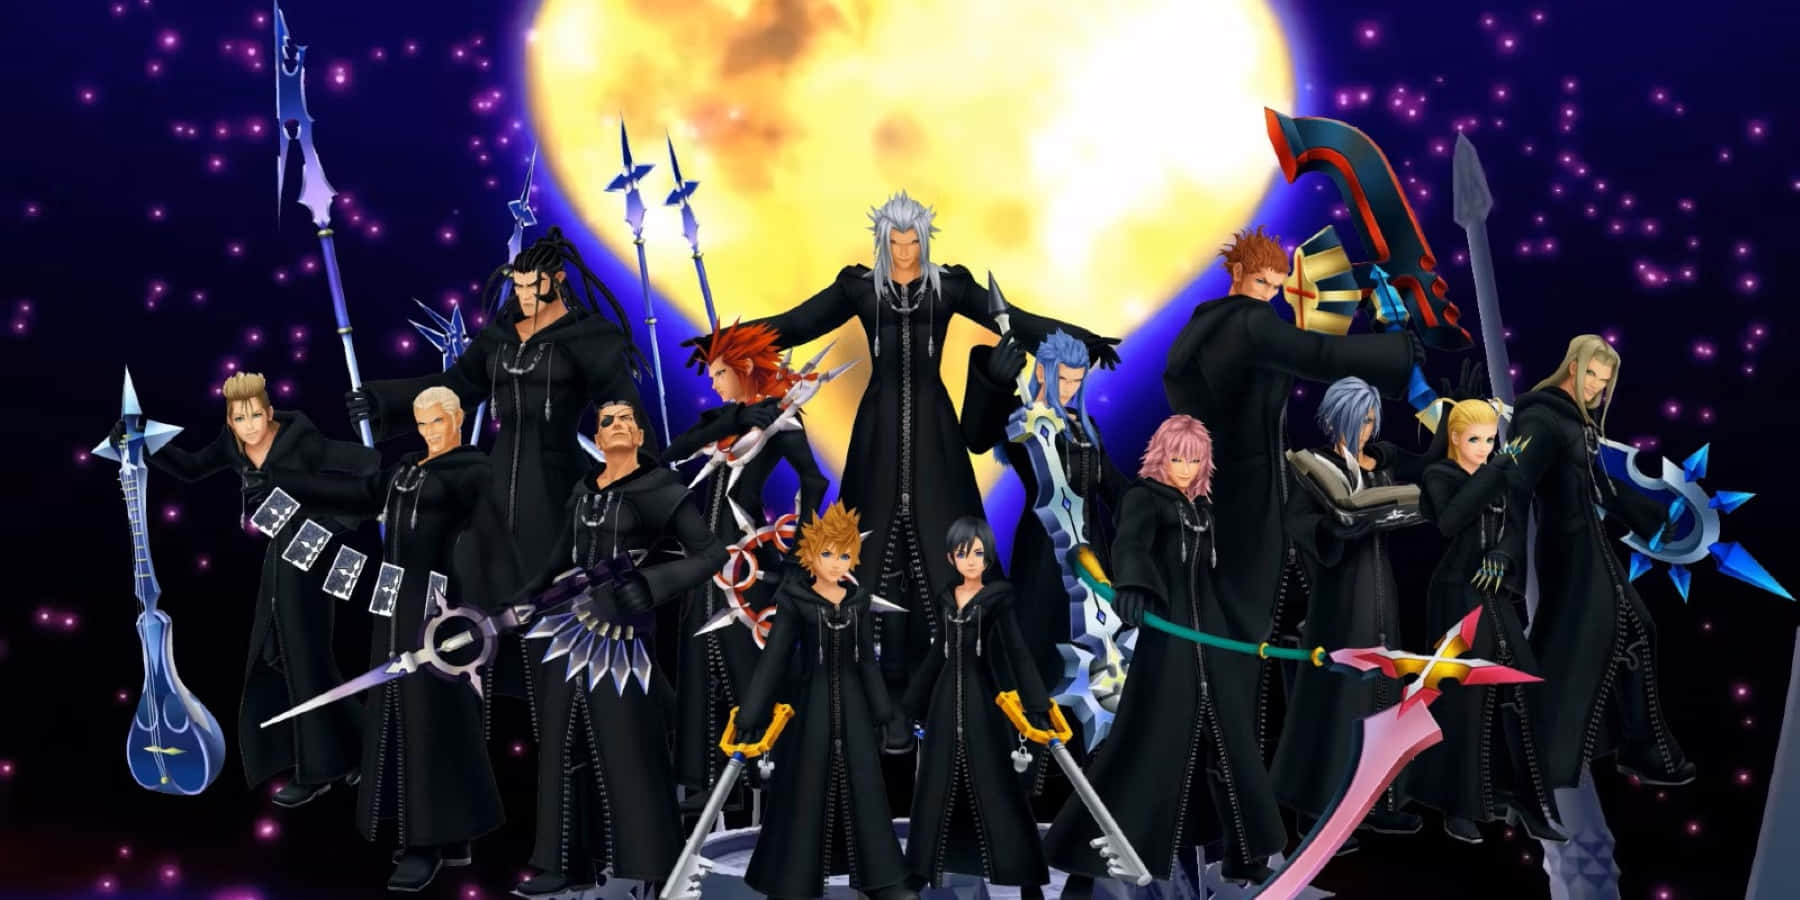 Organization 13 Members from Kingdom Hearts Wallpaper